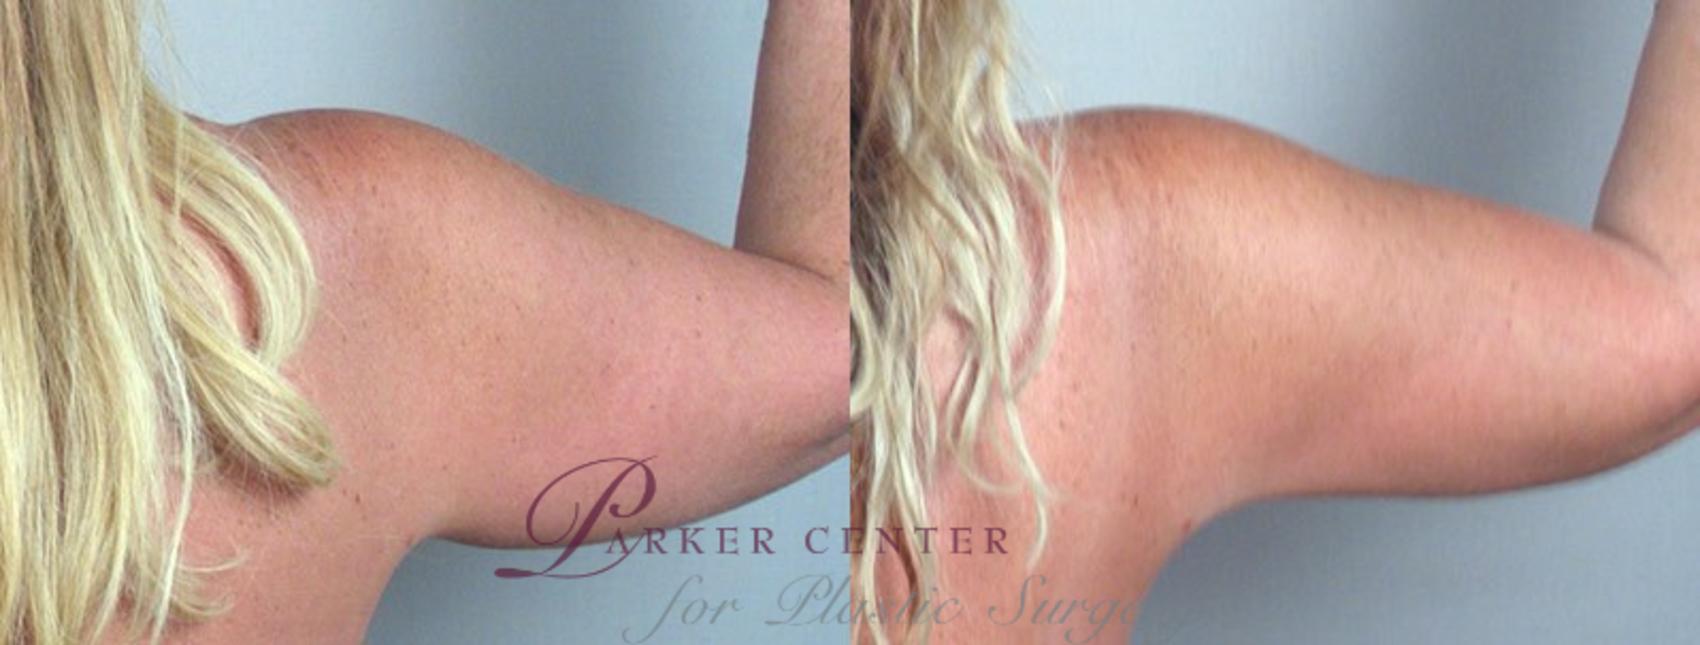 Upper Arm Rejuvenation Case 824 Before & After View #4 | Paramus, New Jersey | Parker Center for Plastic Surgery